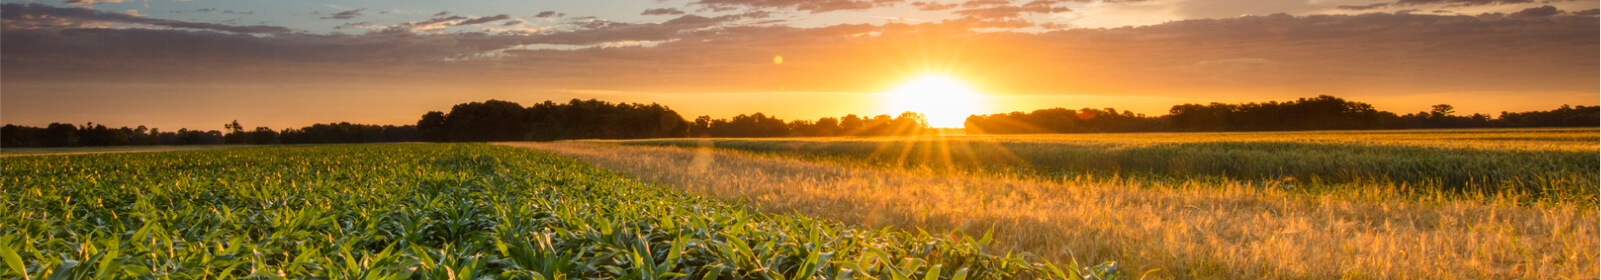 Golden sunset over a field of crops